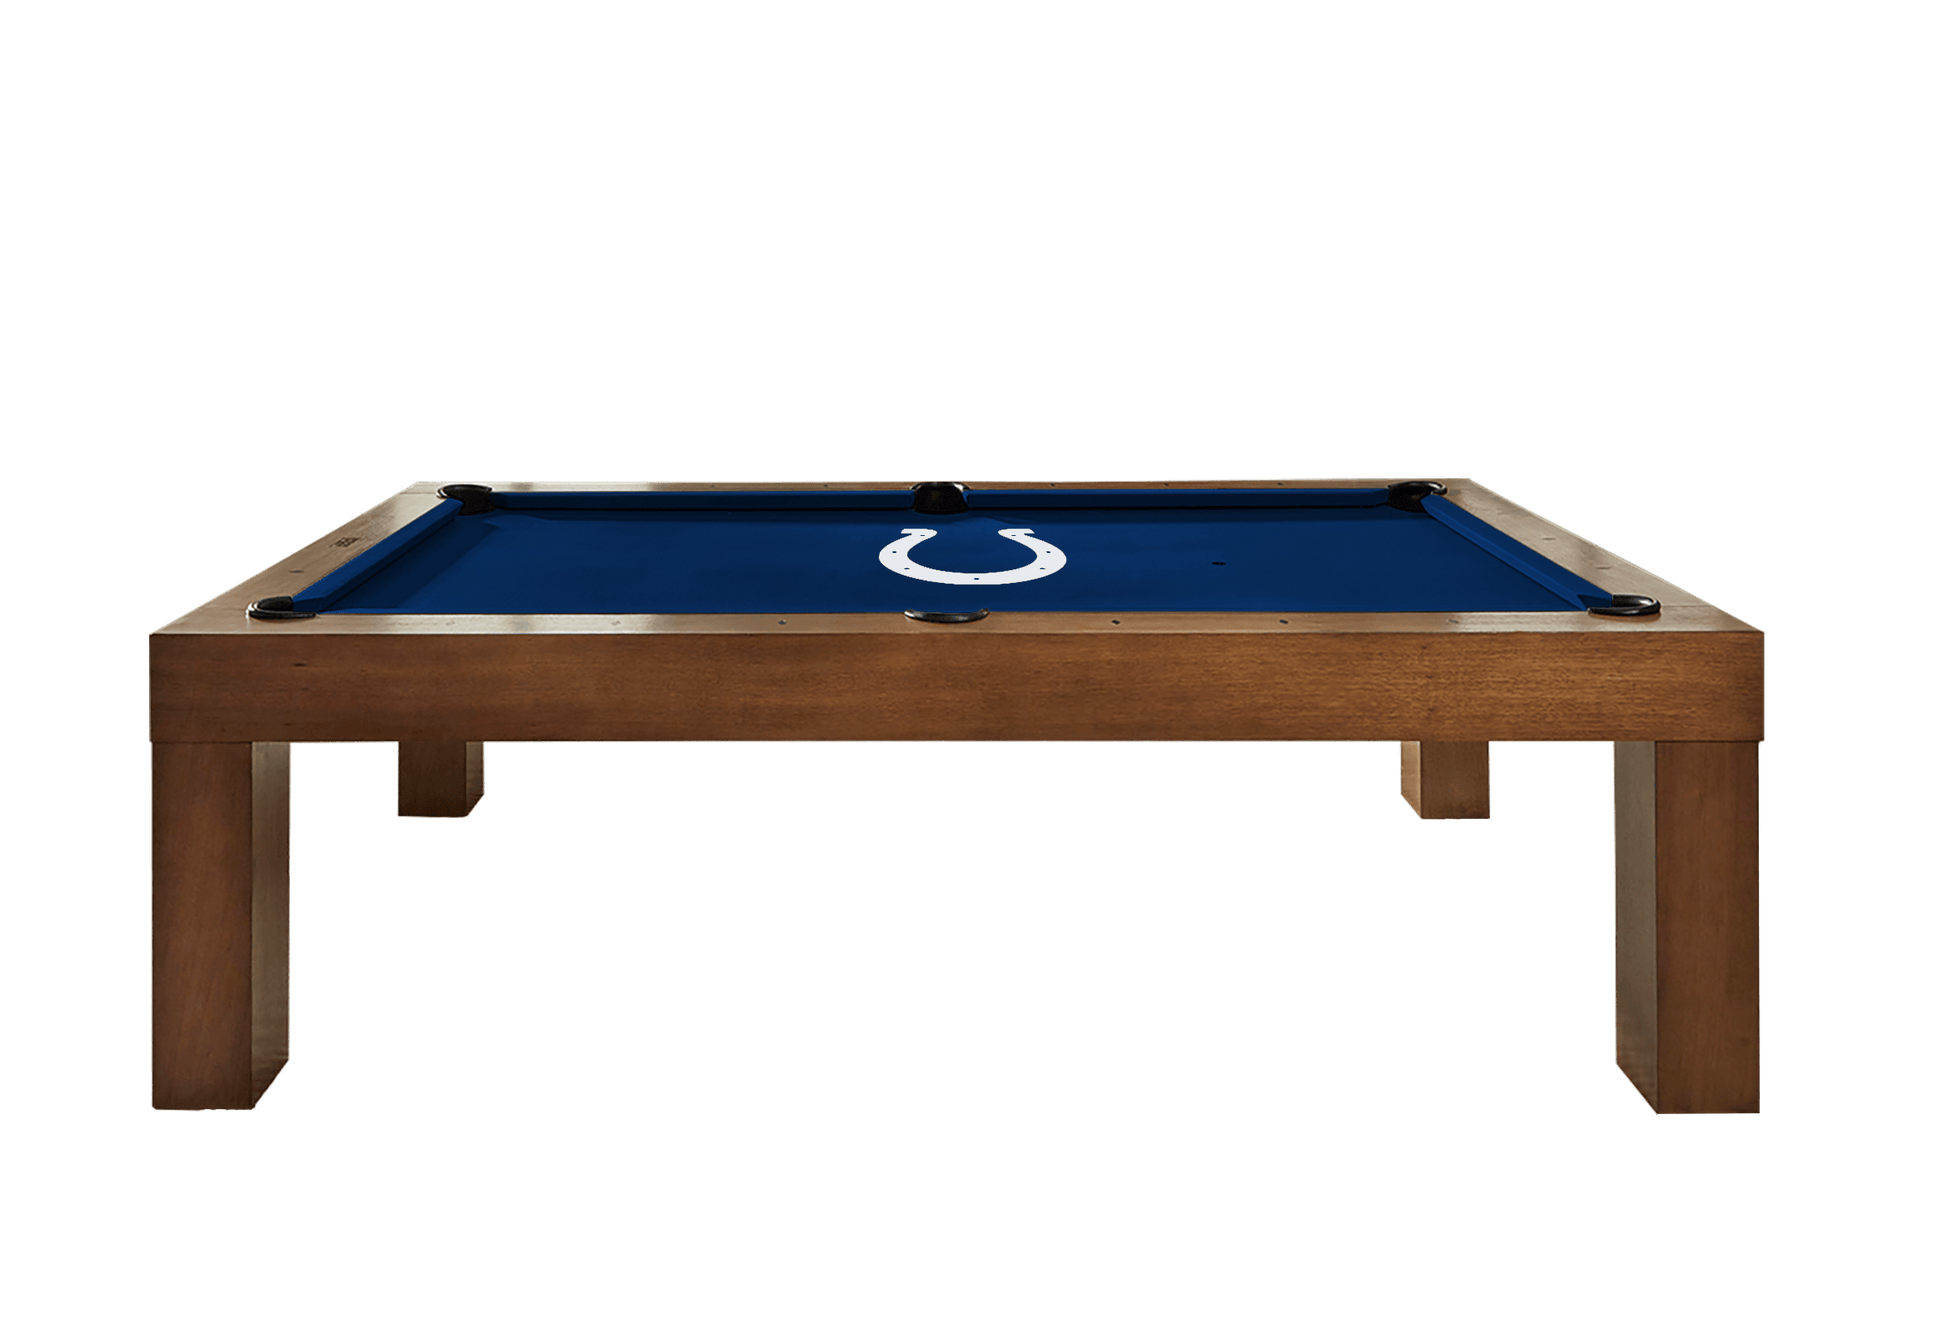 Indianapolis Colts Premium Pool Table Bundle - Walnut Pool Bundle Home Arcade Games   